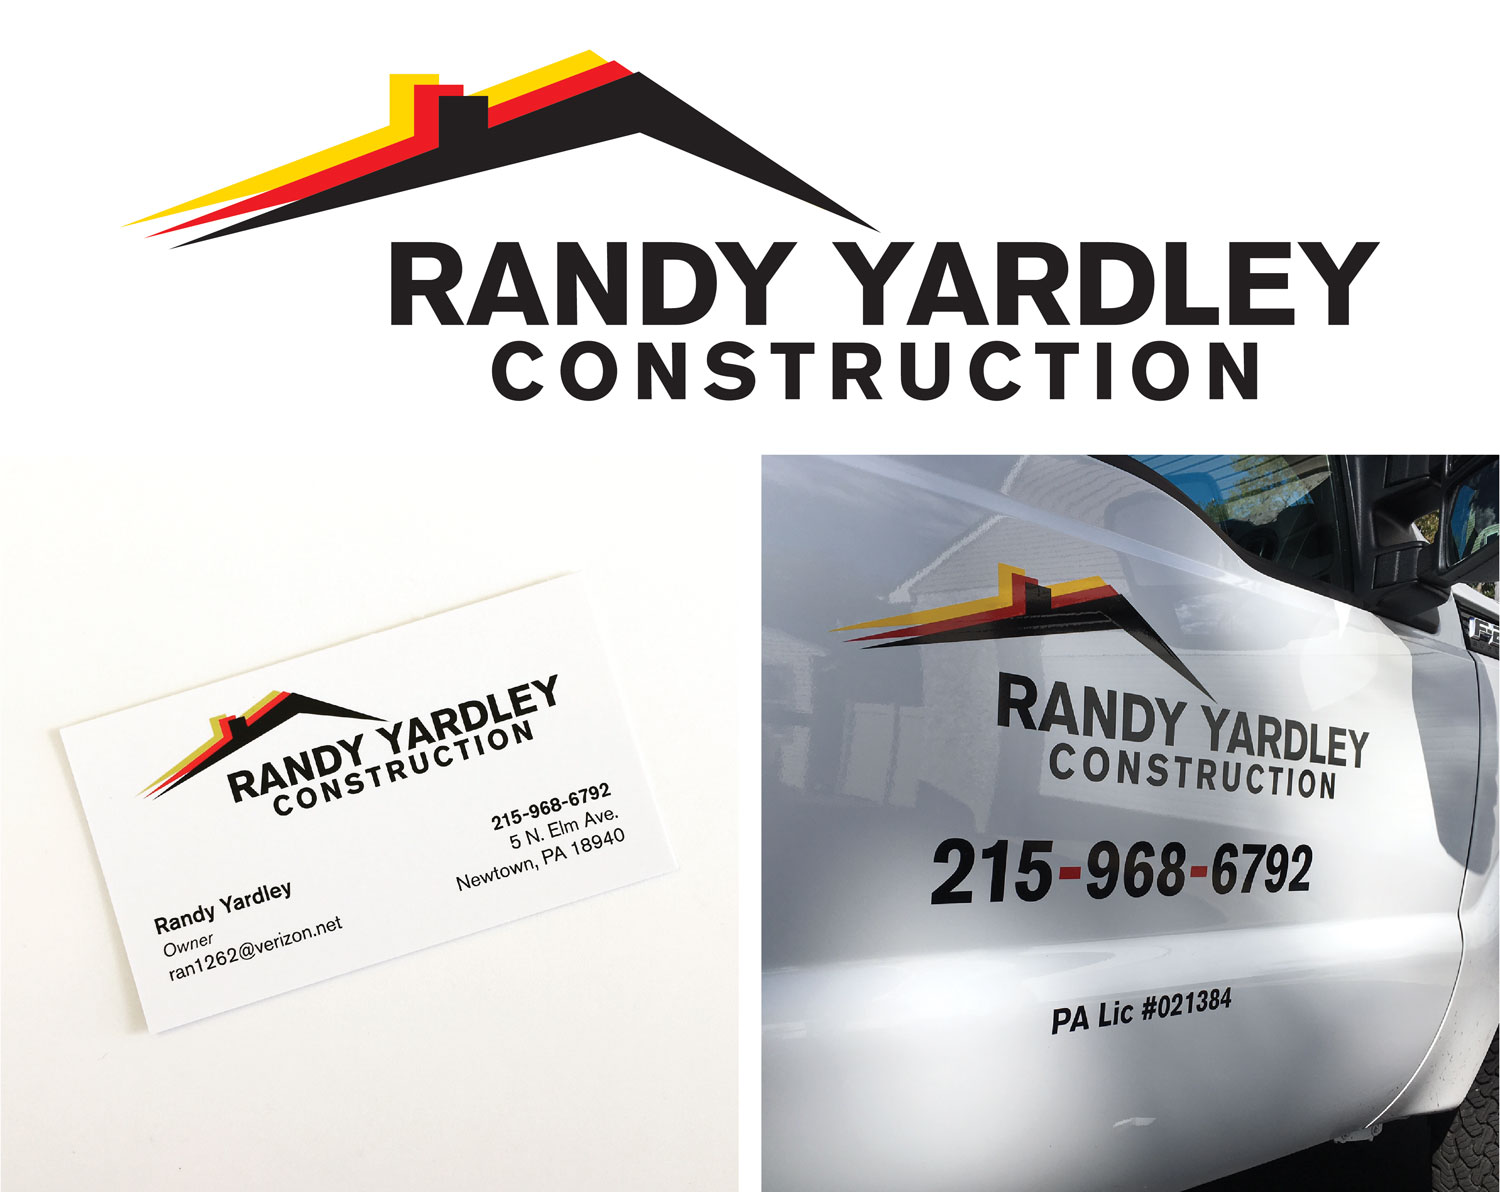 Randy Yardley Construction Branding